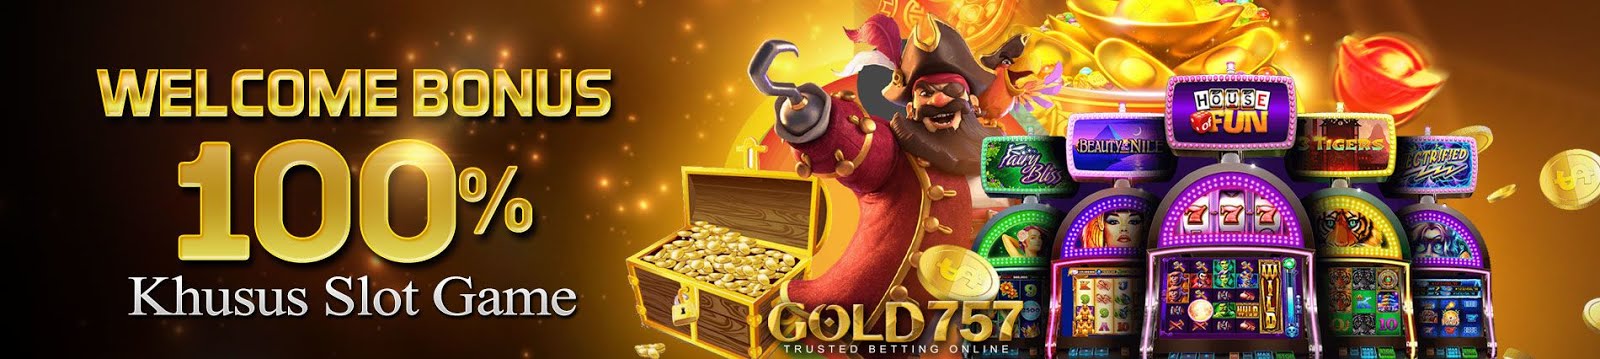 Gold757 | Situs Judi Slot Online | Sbobet | Casino